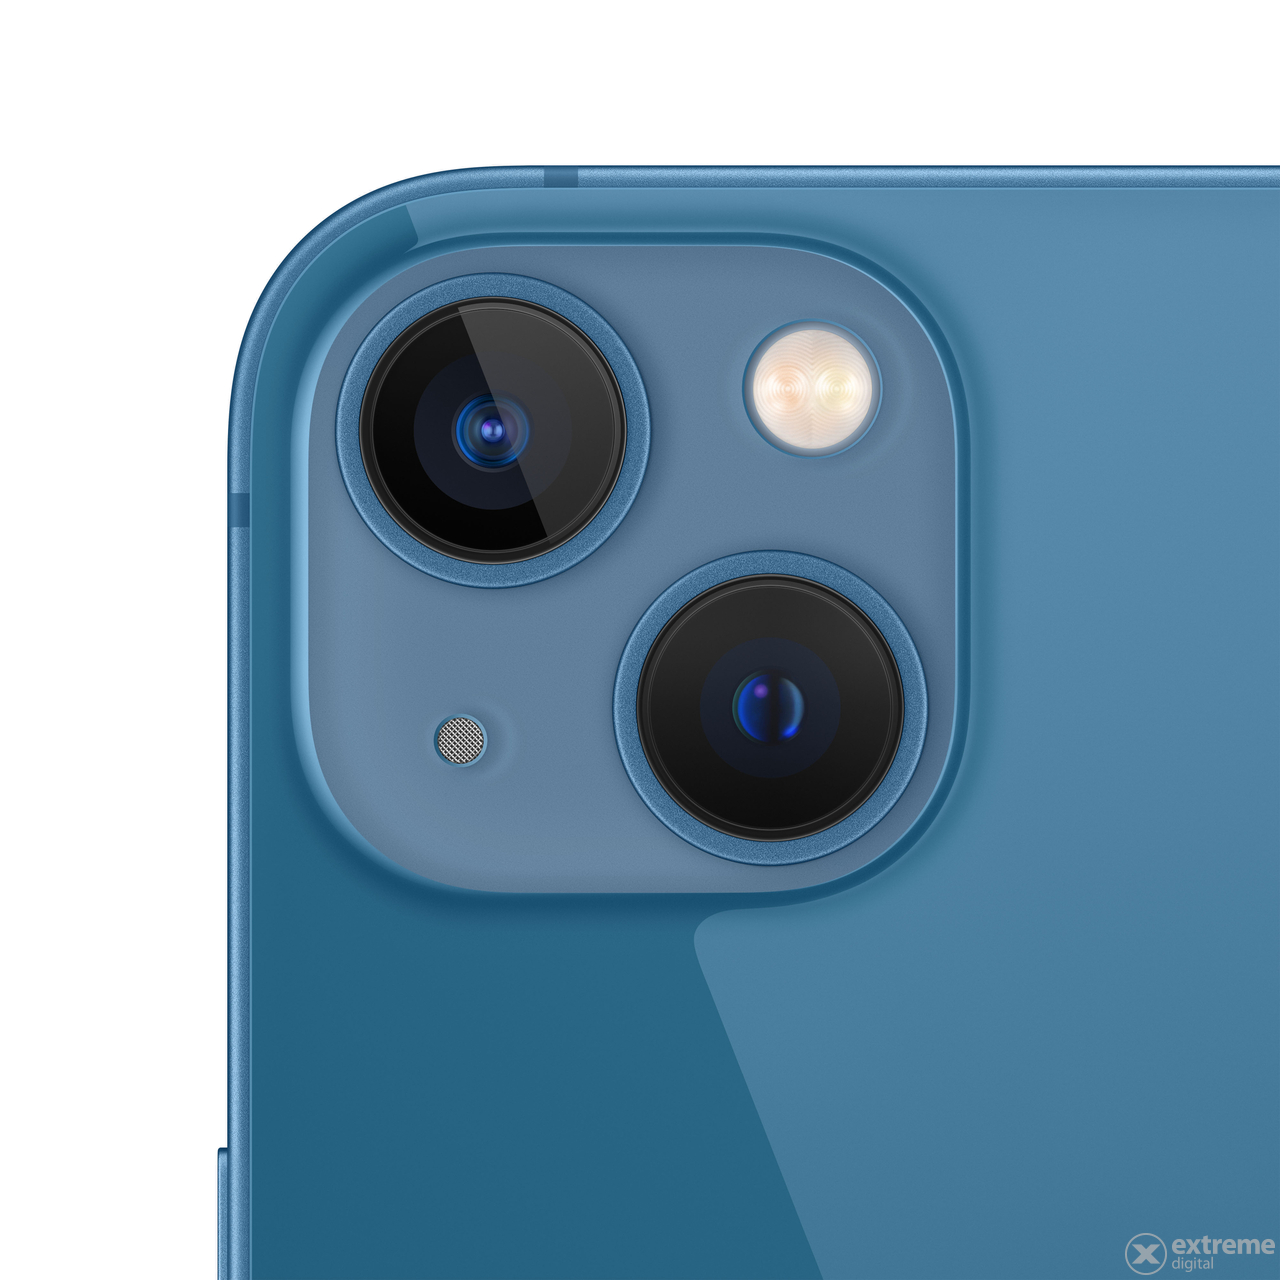 Apple iPhone 13 256GB pametni telefon (mlqa3hu/a), modre barve